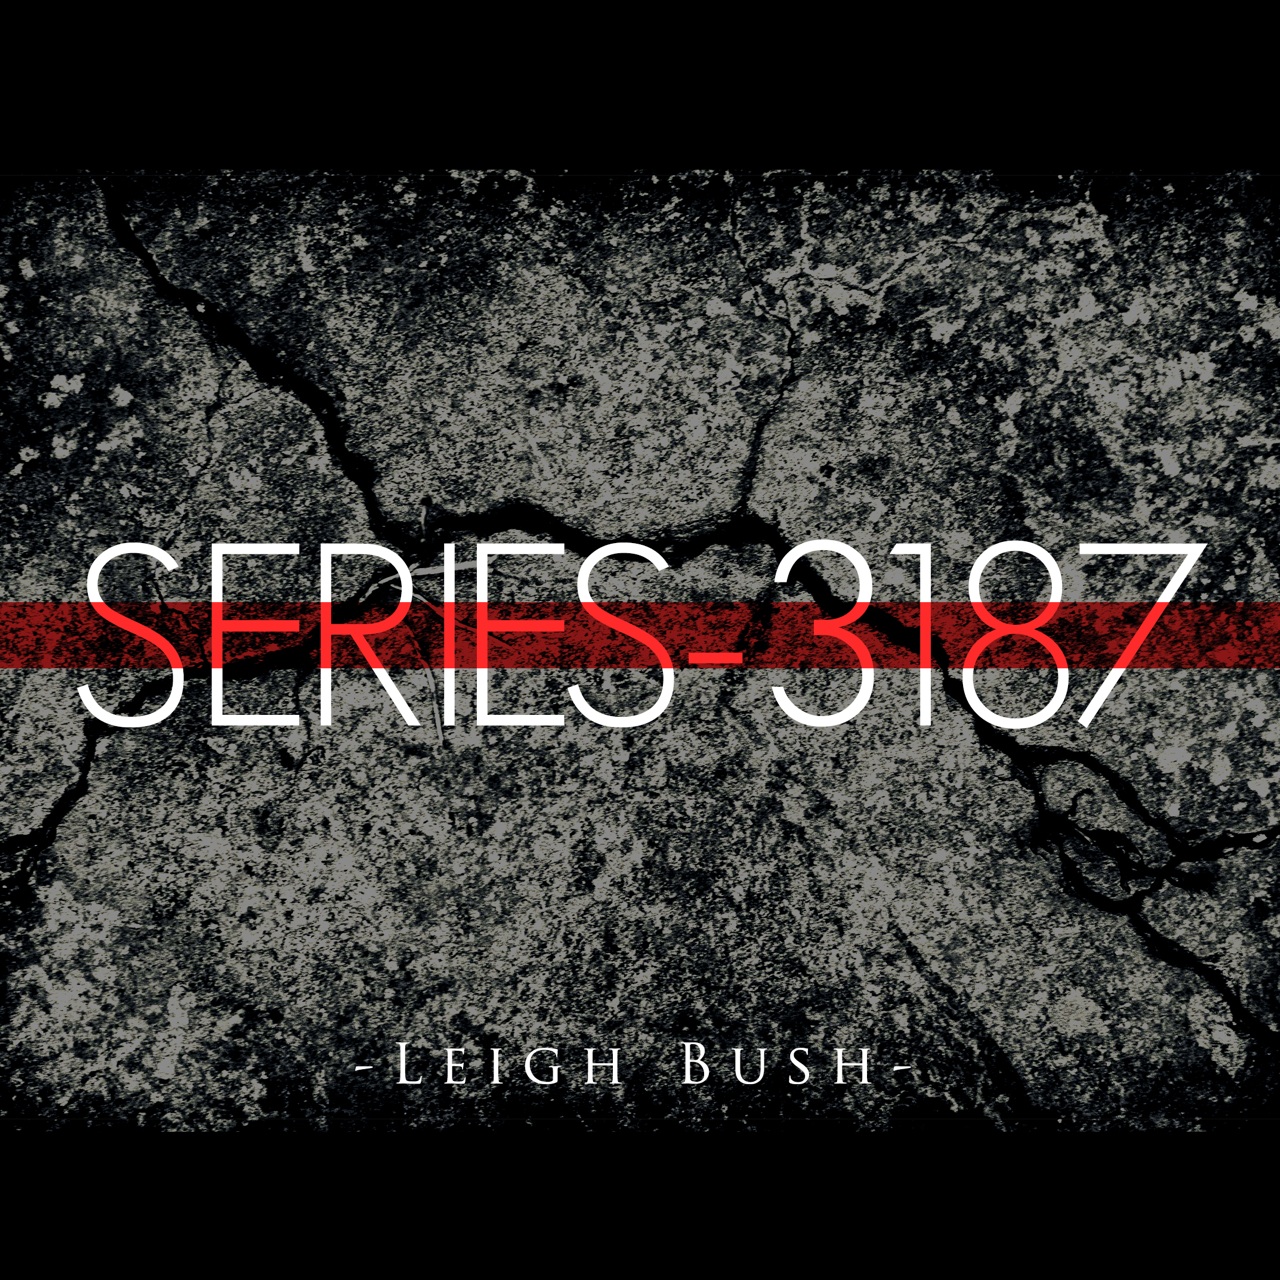 New Music: Leigh Bush "Series 3187" (EP)